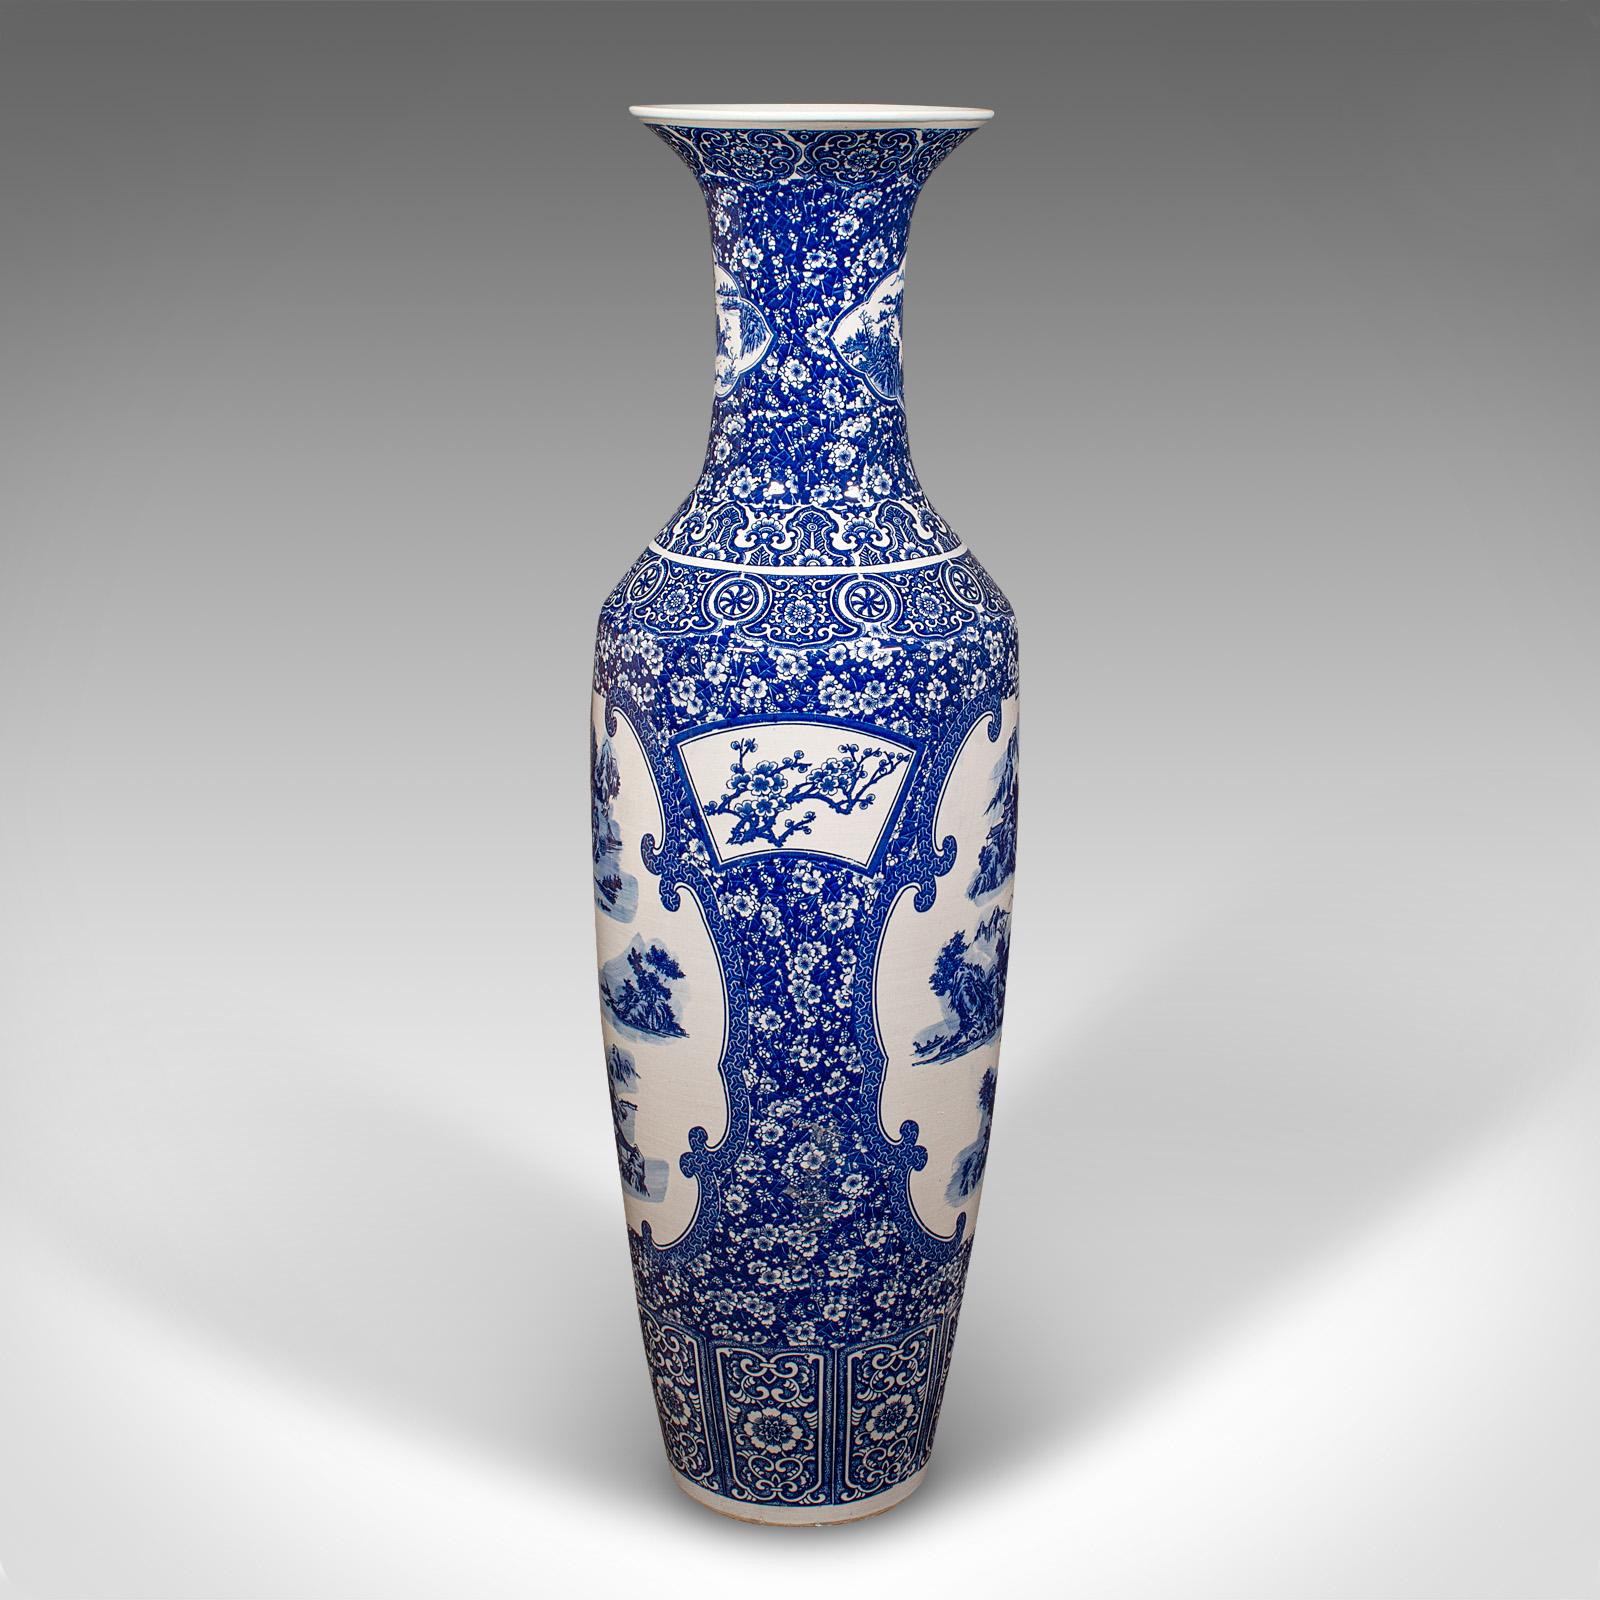 4' Tall Vintage Floor Vase, Chinese, Blue & White, Ceramic, Display, Art Deco For Sale 1